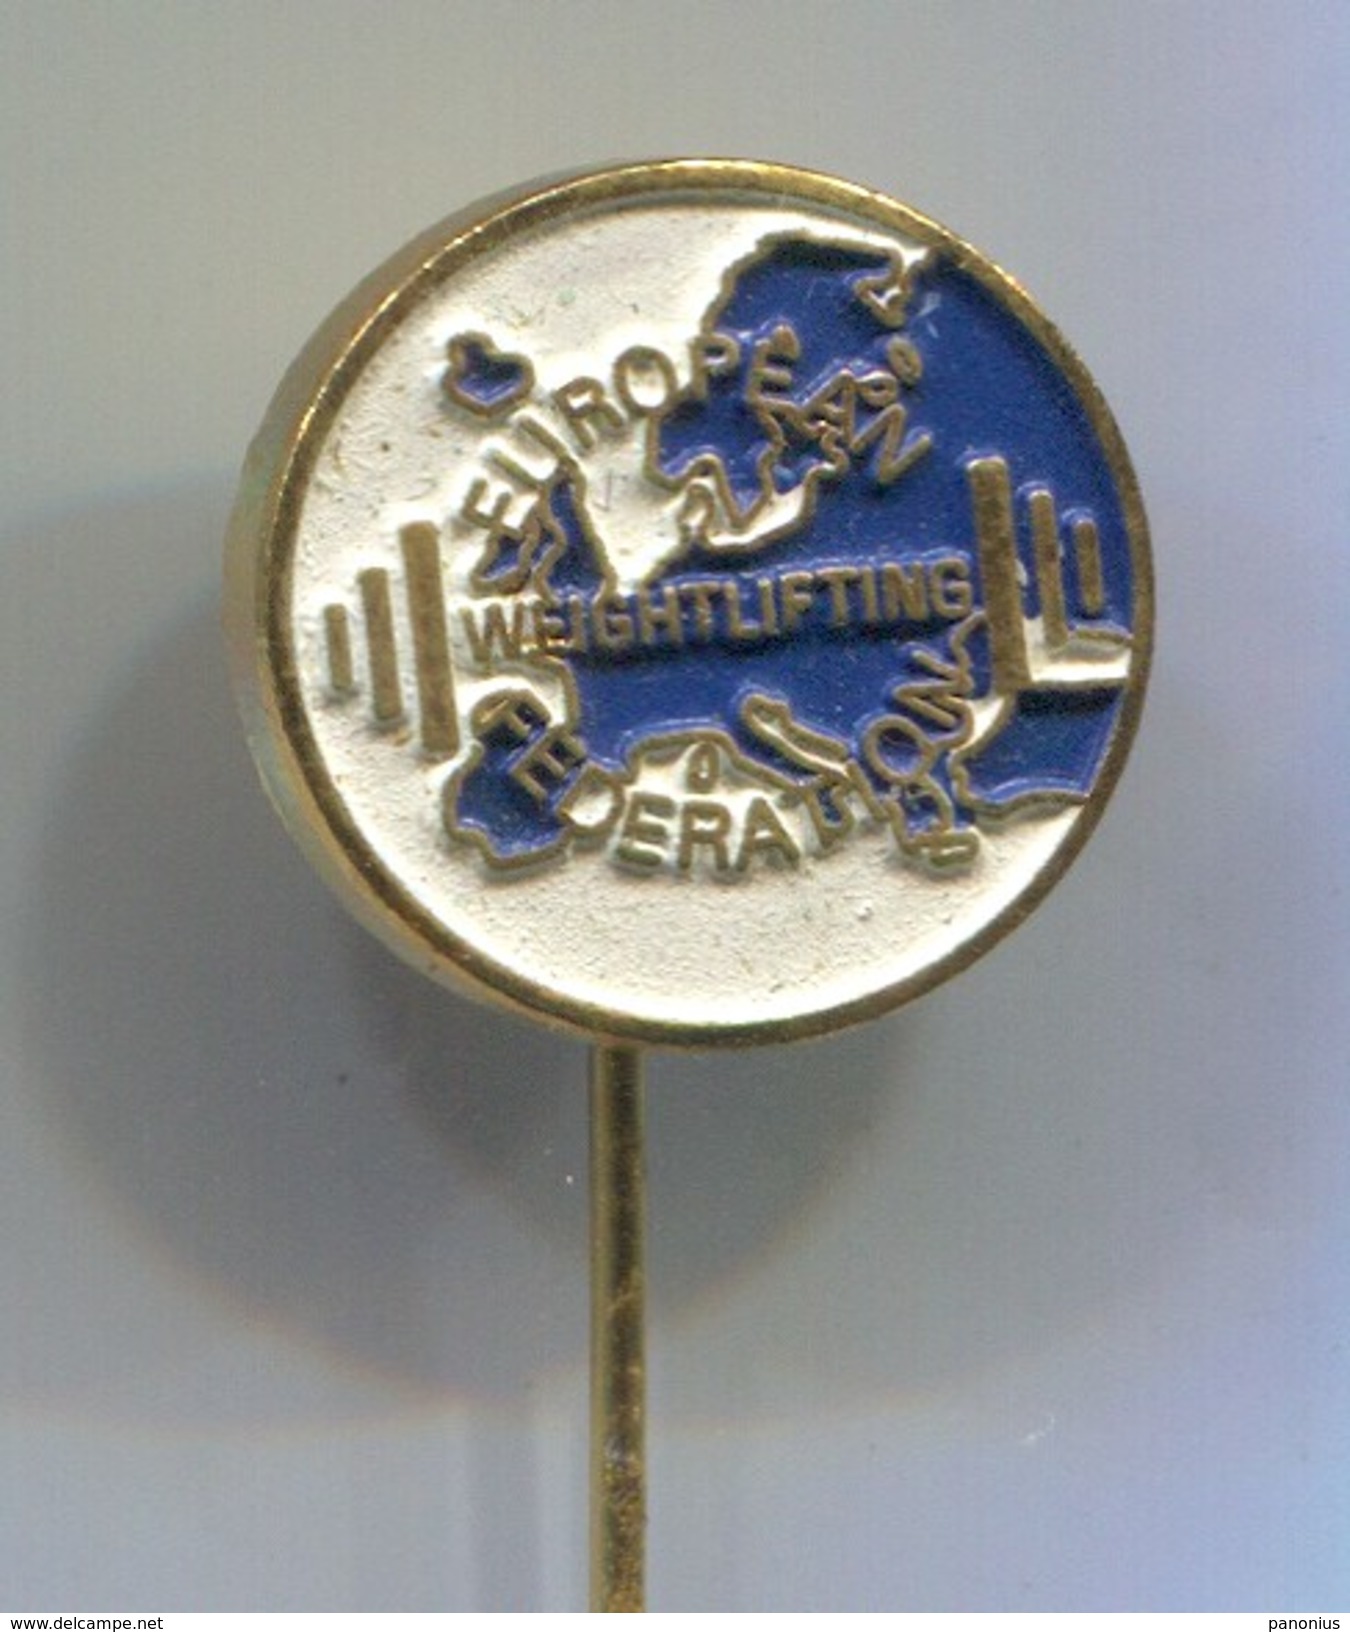 Weightlifting - EUROPEAN FEDERATION, Vintage Pin Badge, Abzeichen - Weightlifting